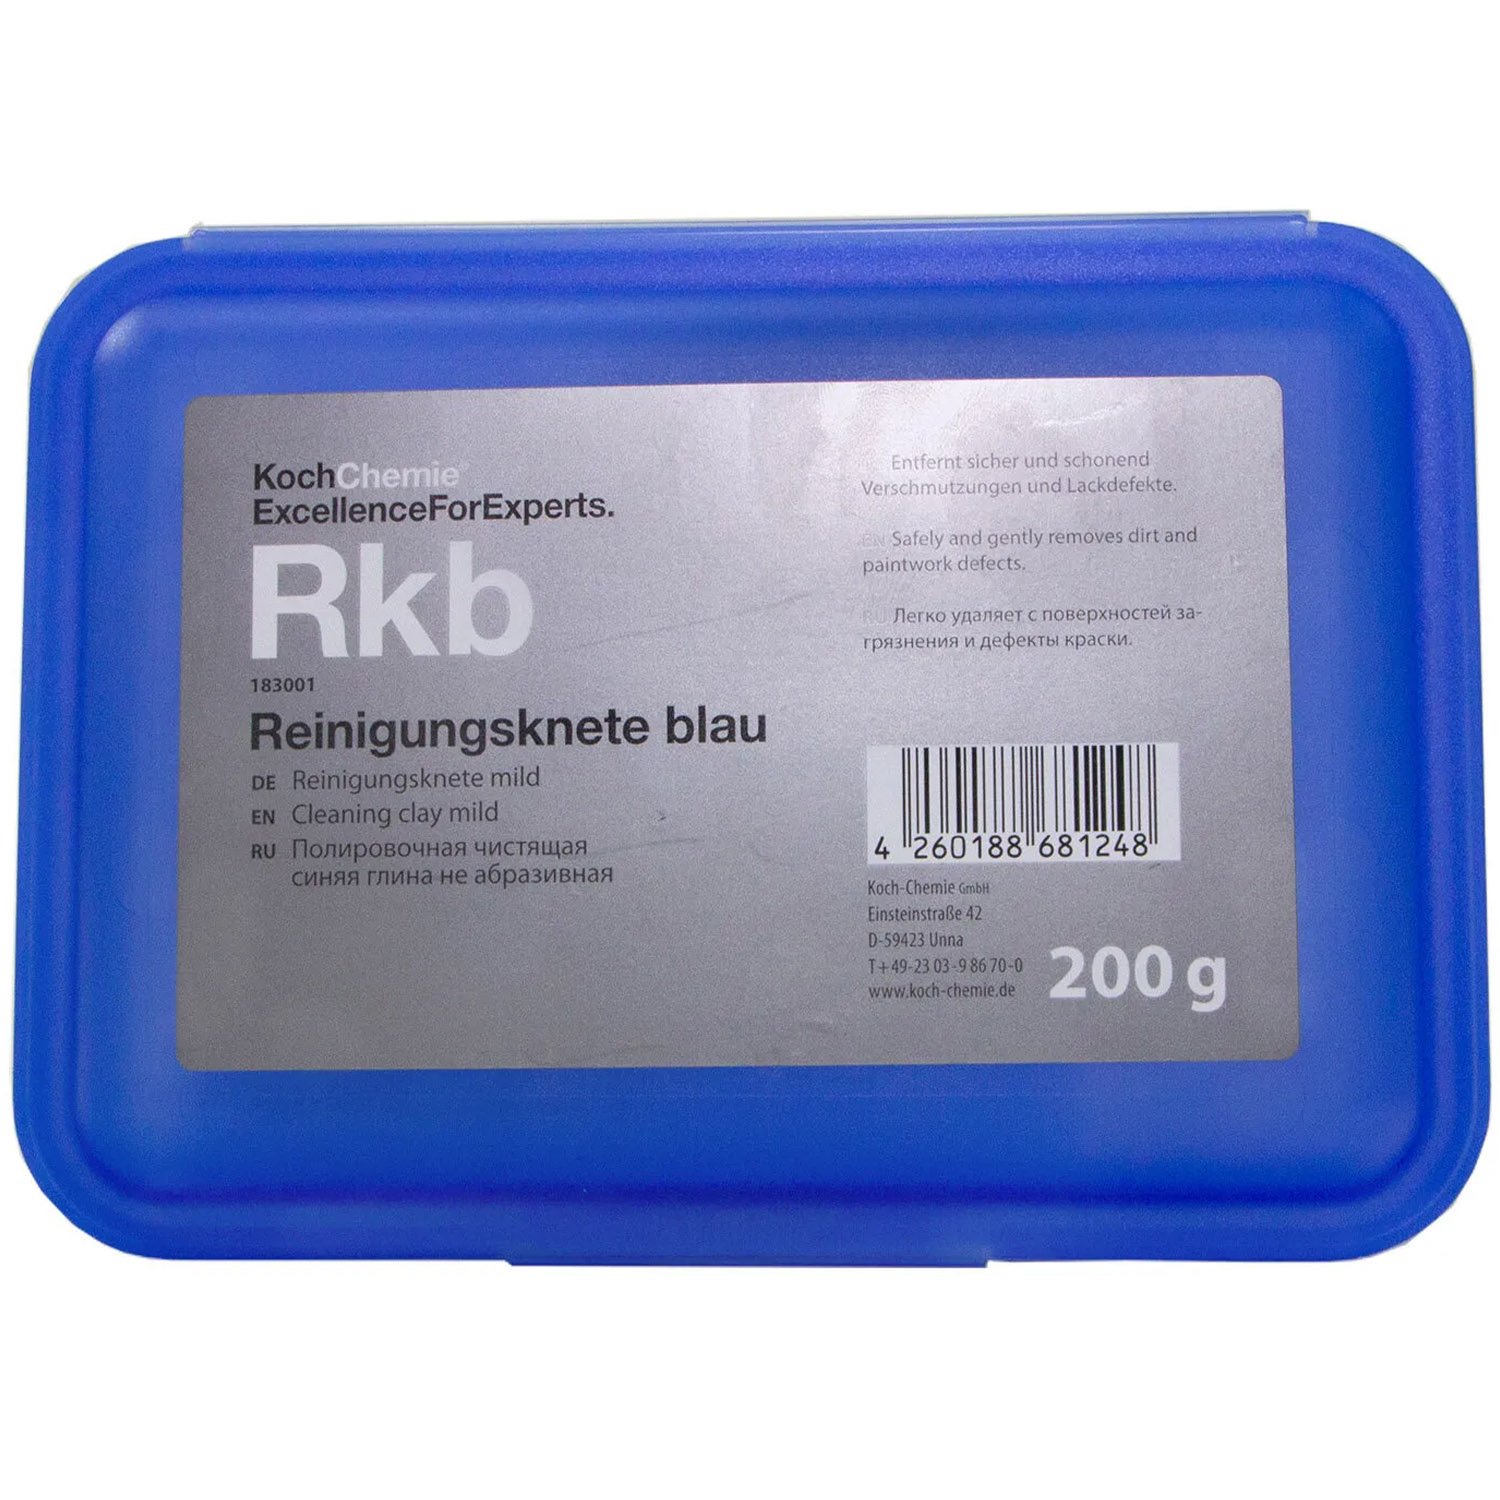 Глина Koch Chemie Reinigungsknete blau для очищення та полірування ЛФП - фото 2